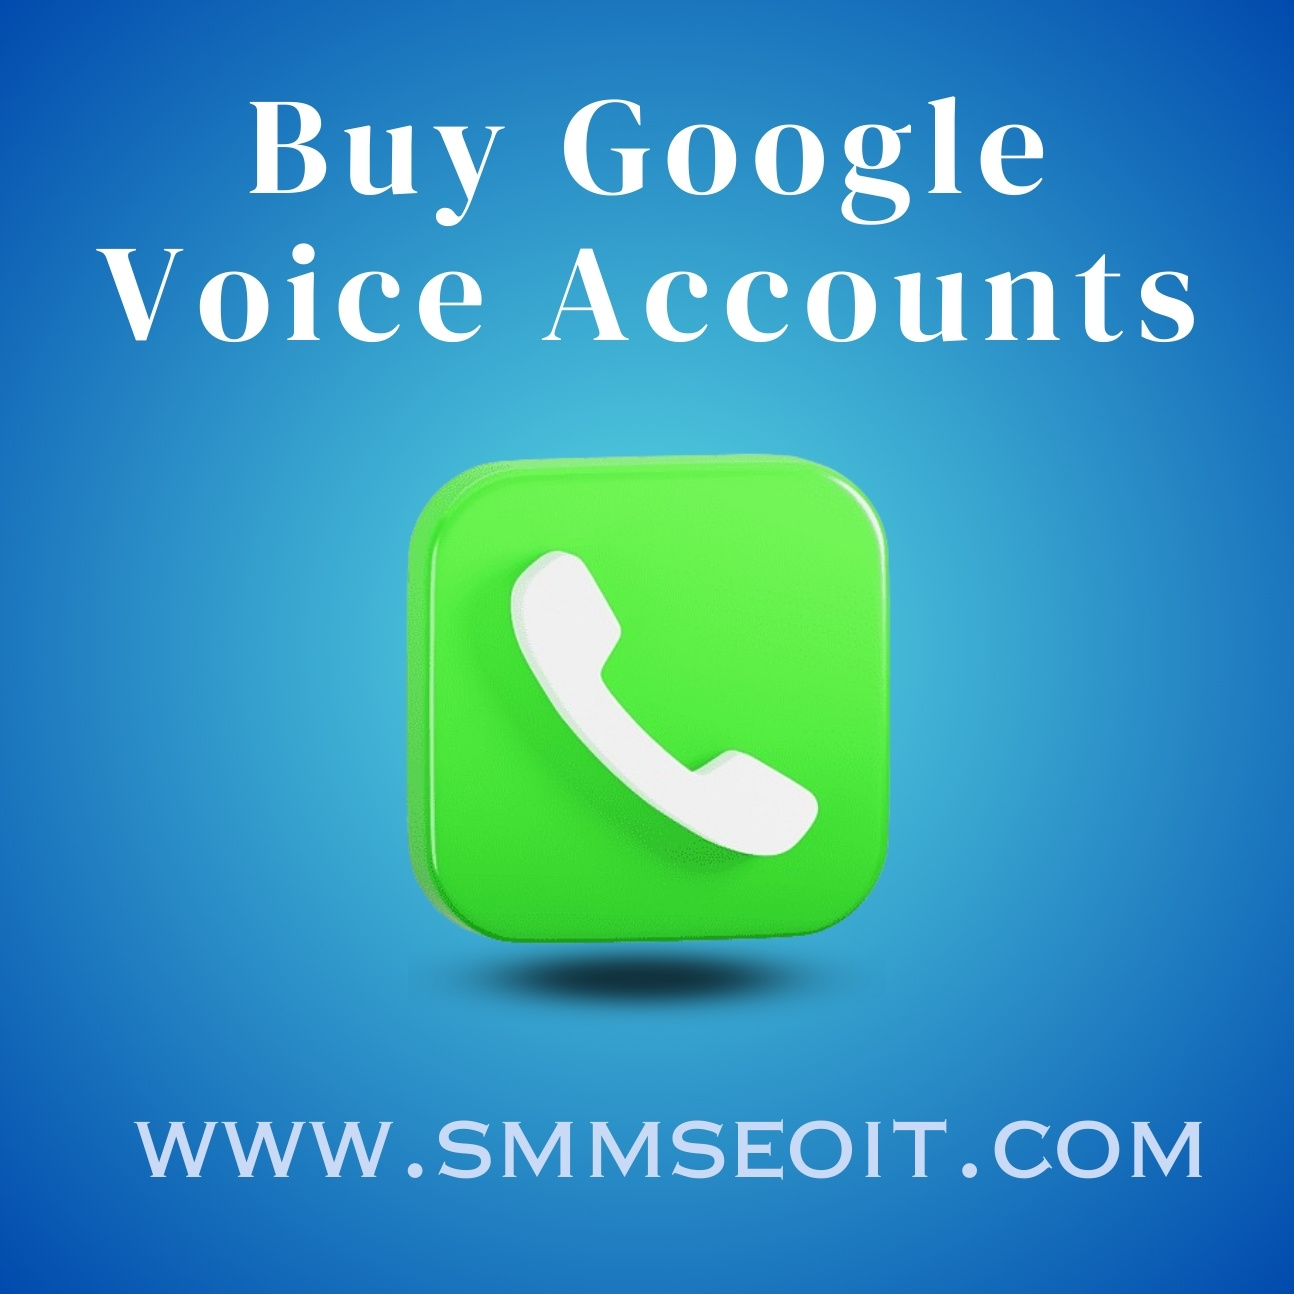 Buy Google Voice Accounts - 100% USA Verified Account